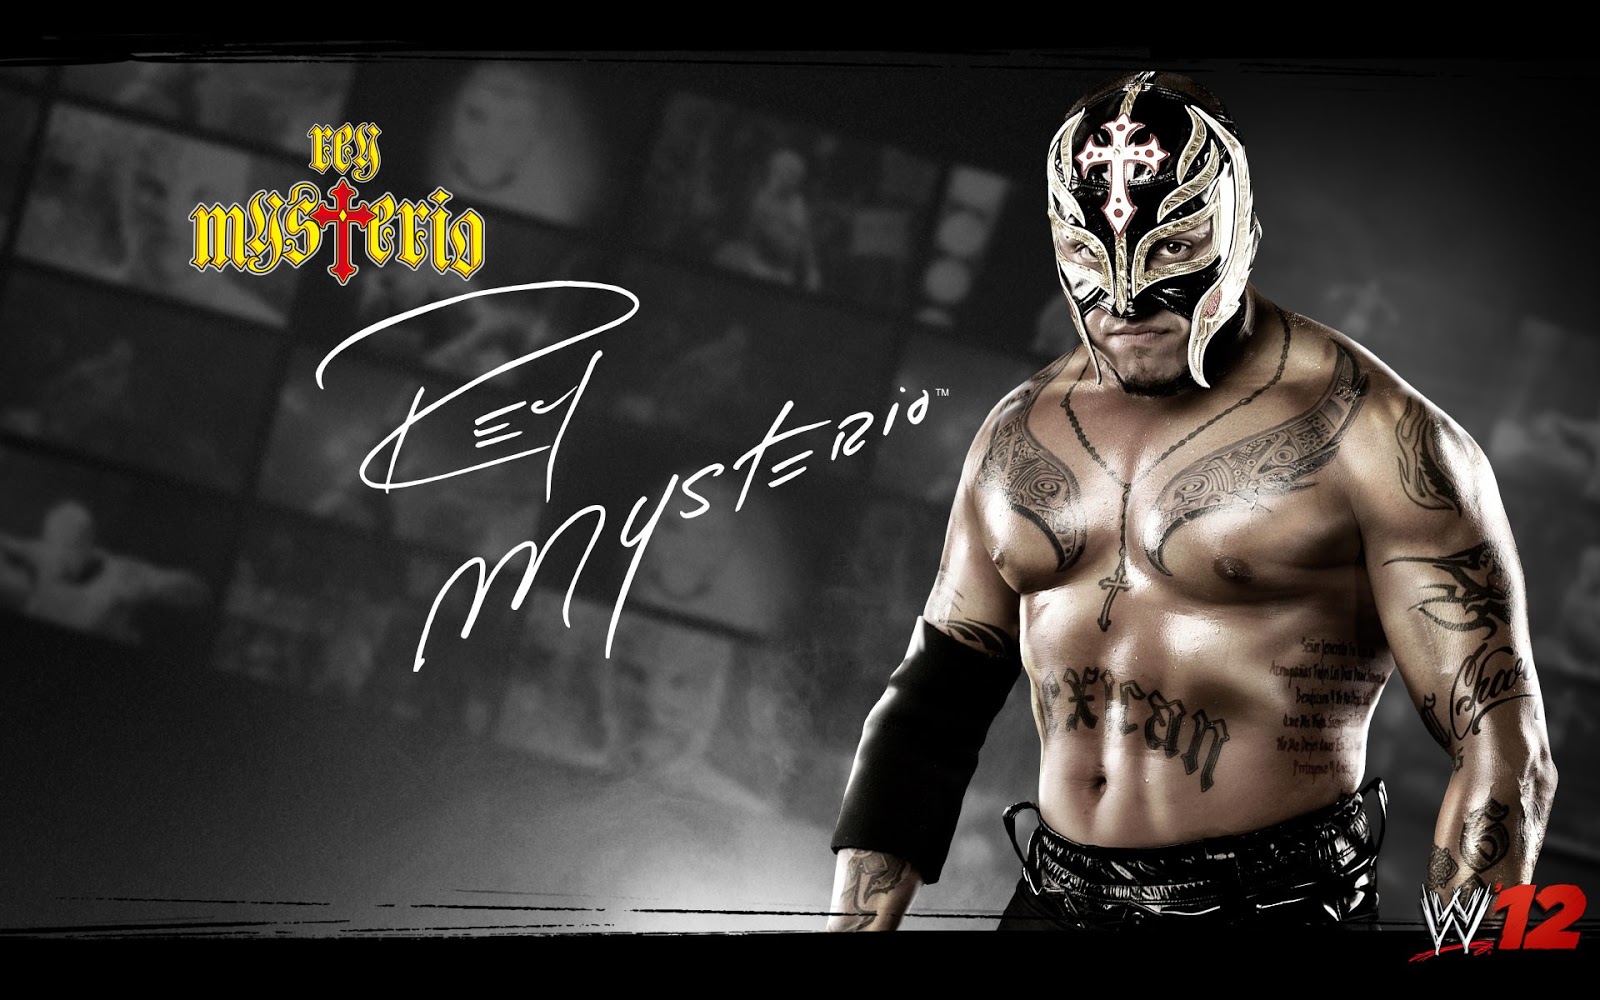 WWE Rey Mysterio 619 HD Wallpapers | WWE Wrestling Wallpapers